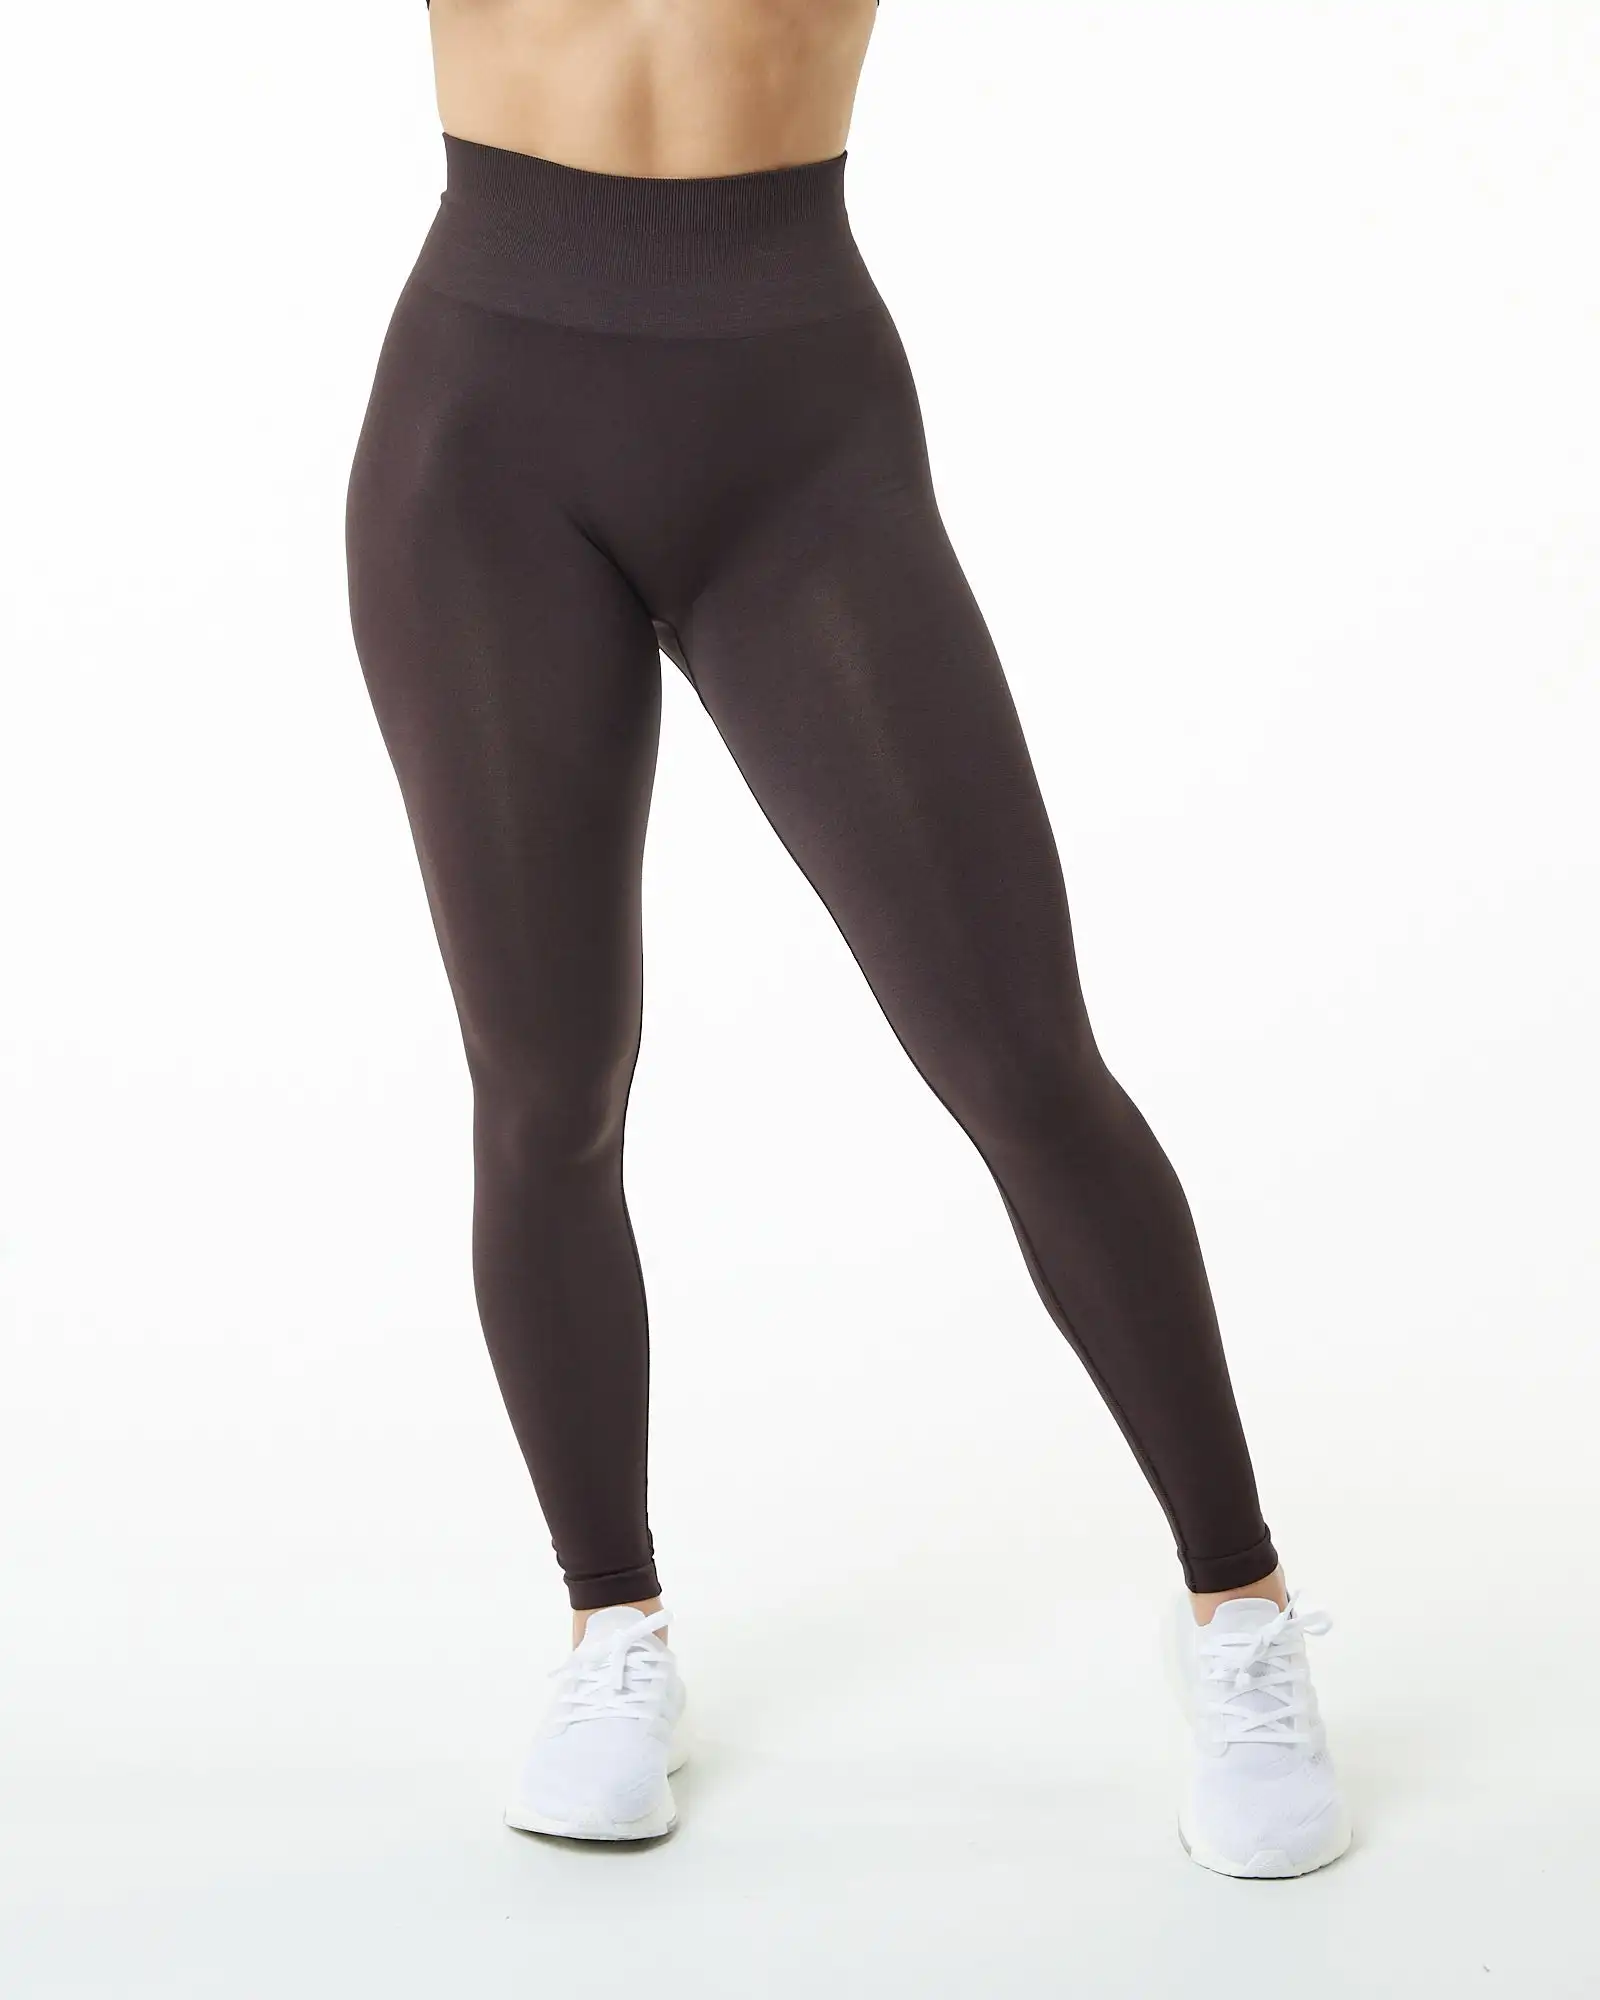 26 Color Amplify Leggings Women Seamless Scrunch Leggings Push Up Booty  Legging Workout Gym Tights Fitness High Waist Yoga Pants - AliExpress